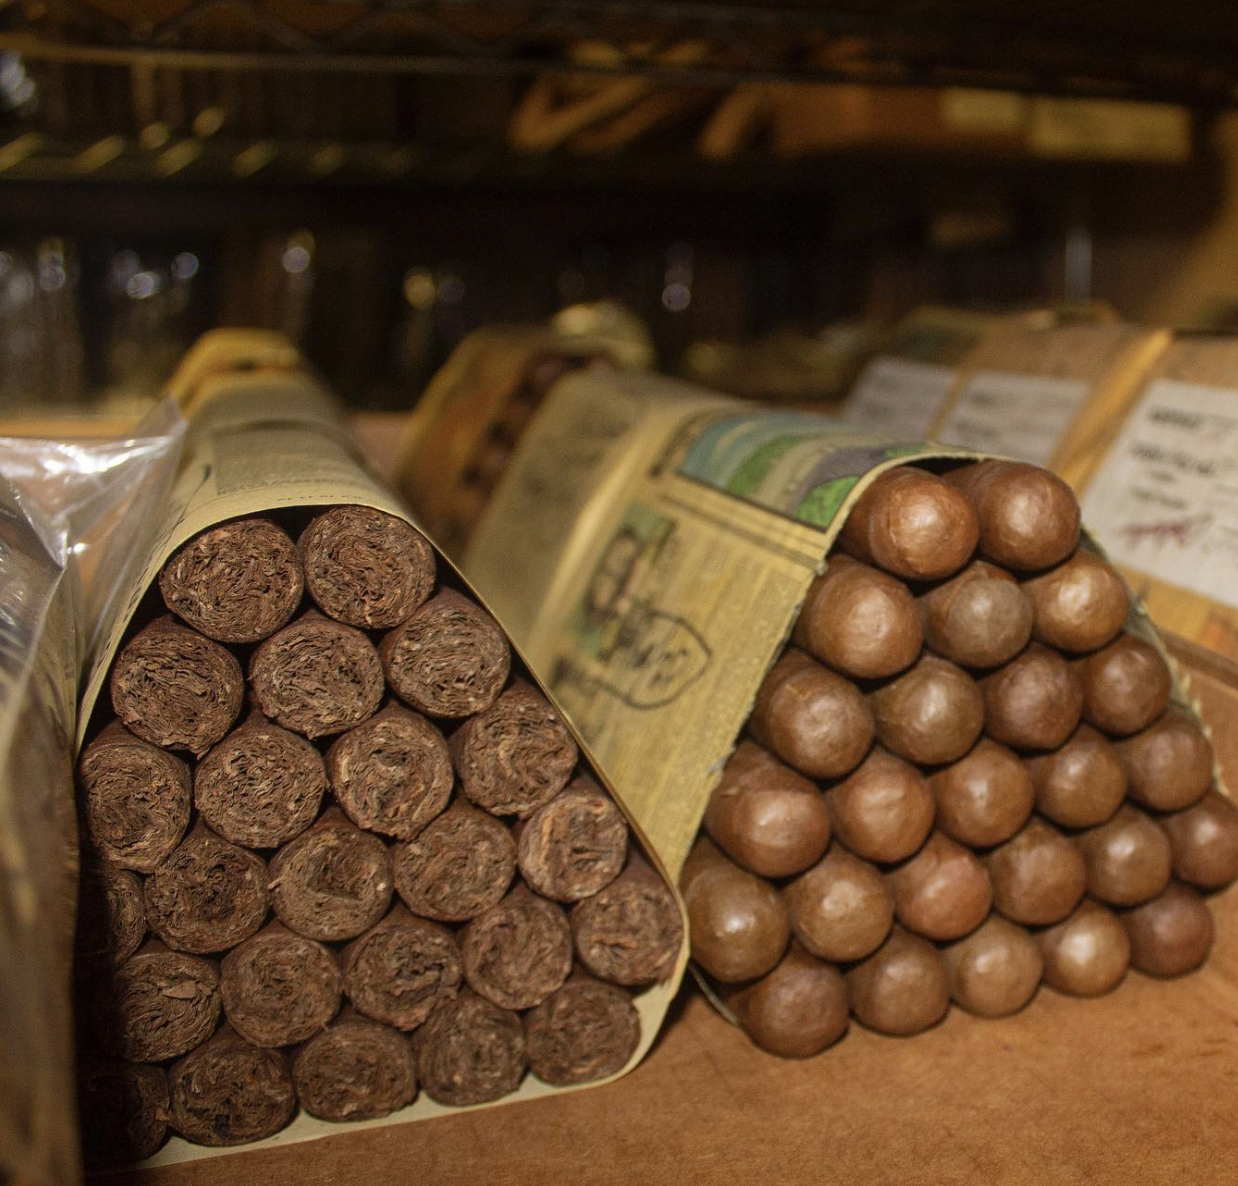 Bobalu's Buyer's Club: BOGO, 50% off single cigars